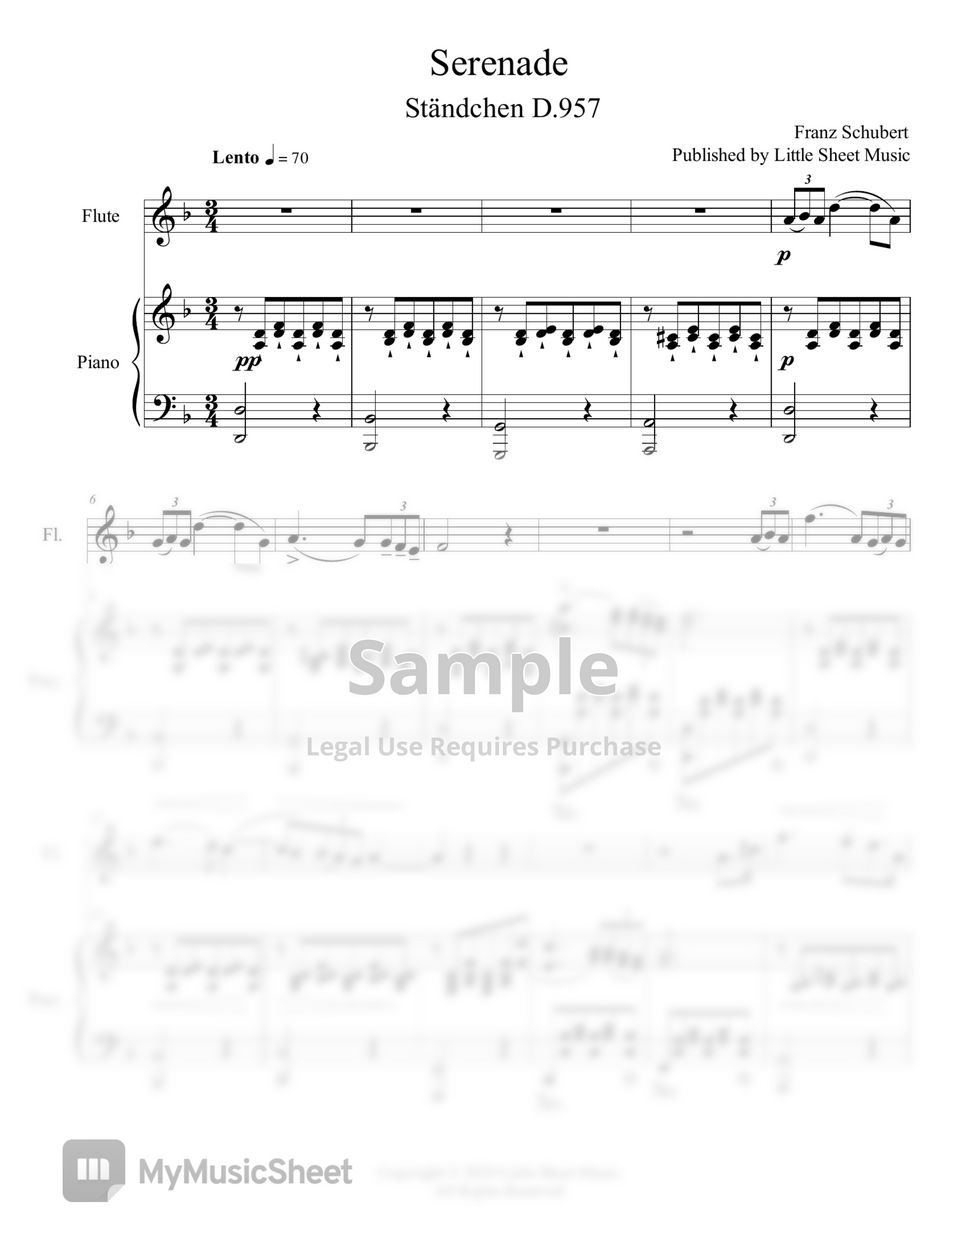 Franz Schubert - Ständchen (Serenade) from (Schwanengesang D.957) (Flute Solo with Piano Accompaniment) by Genti Guxholli